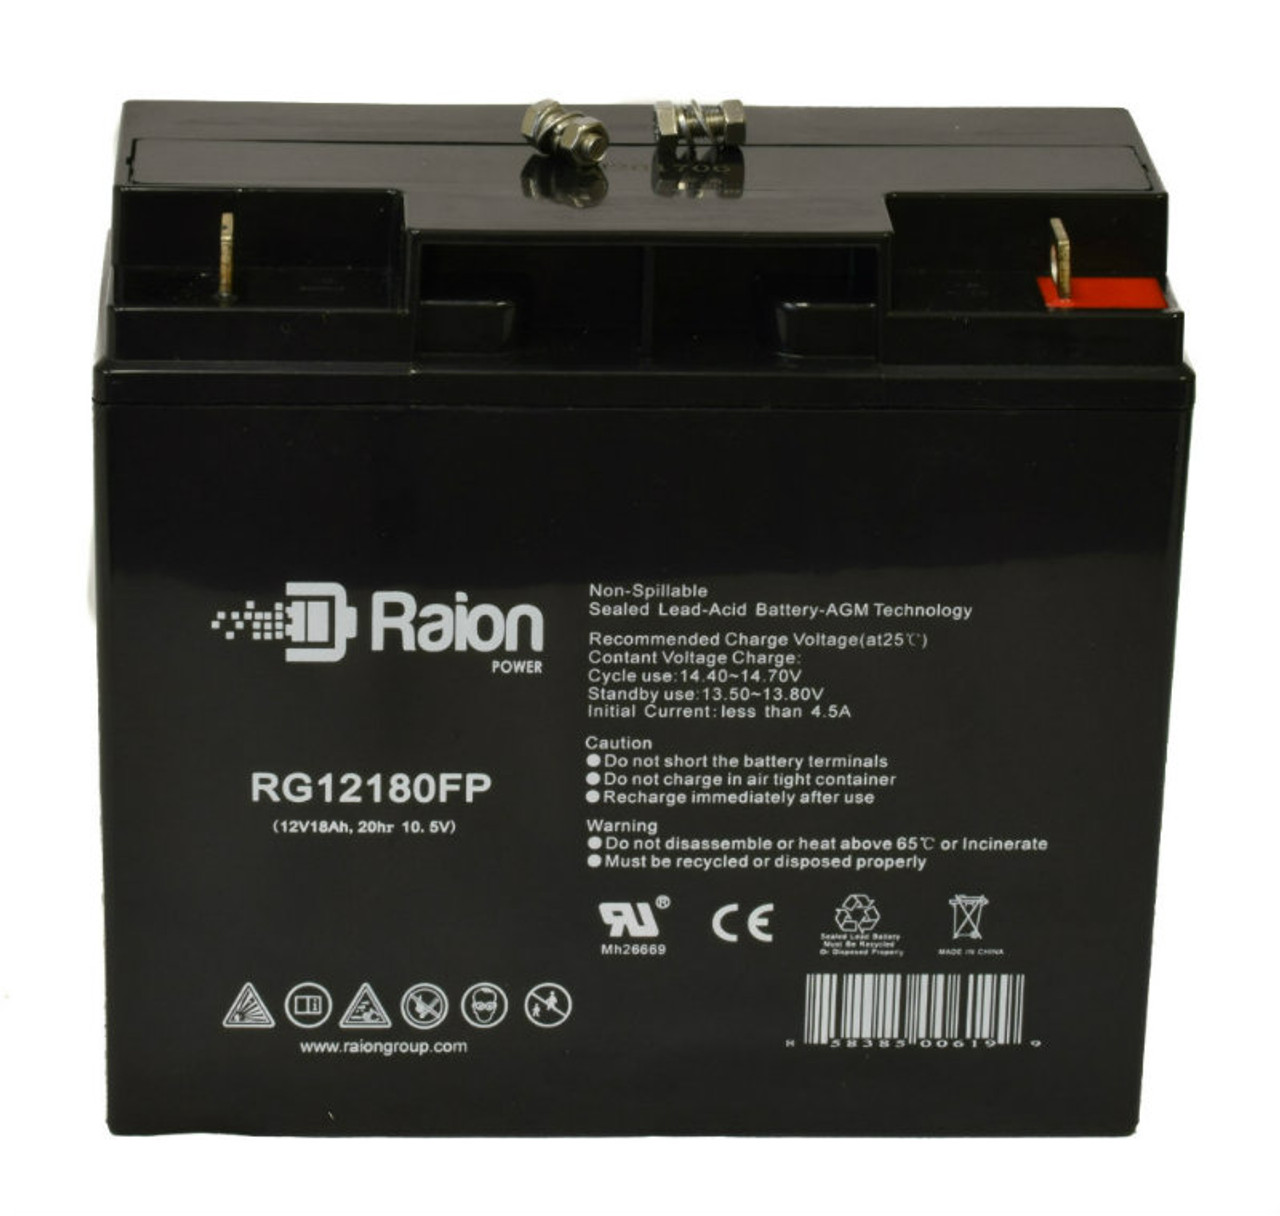 Raion Power RG12180FP 12V 18Ah Lead Acid Battery for Picker International Techmobile Portable X-Ray